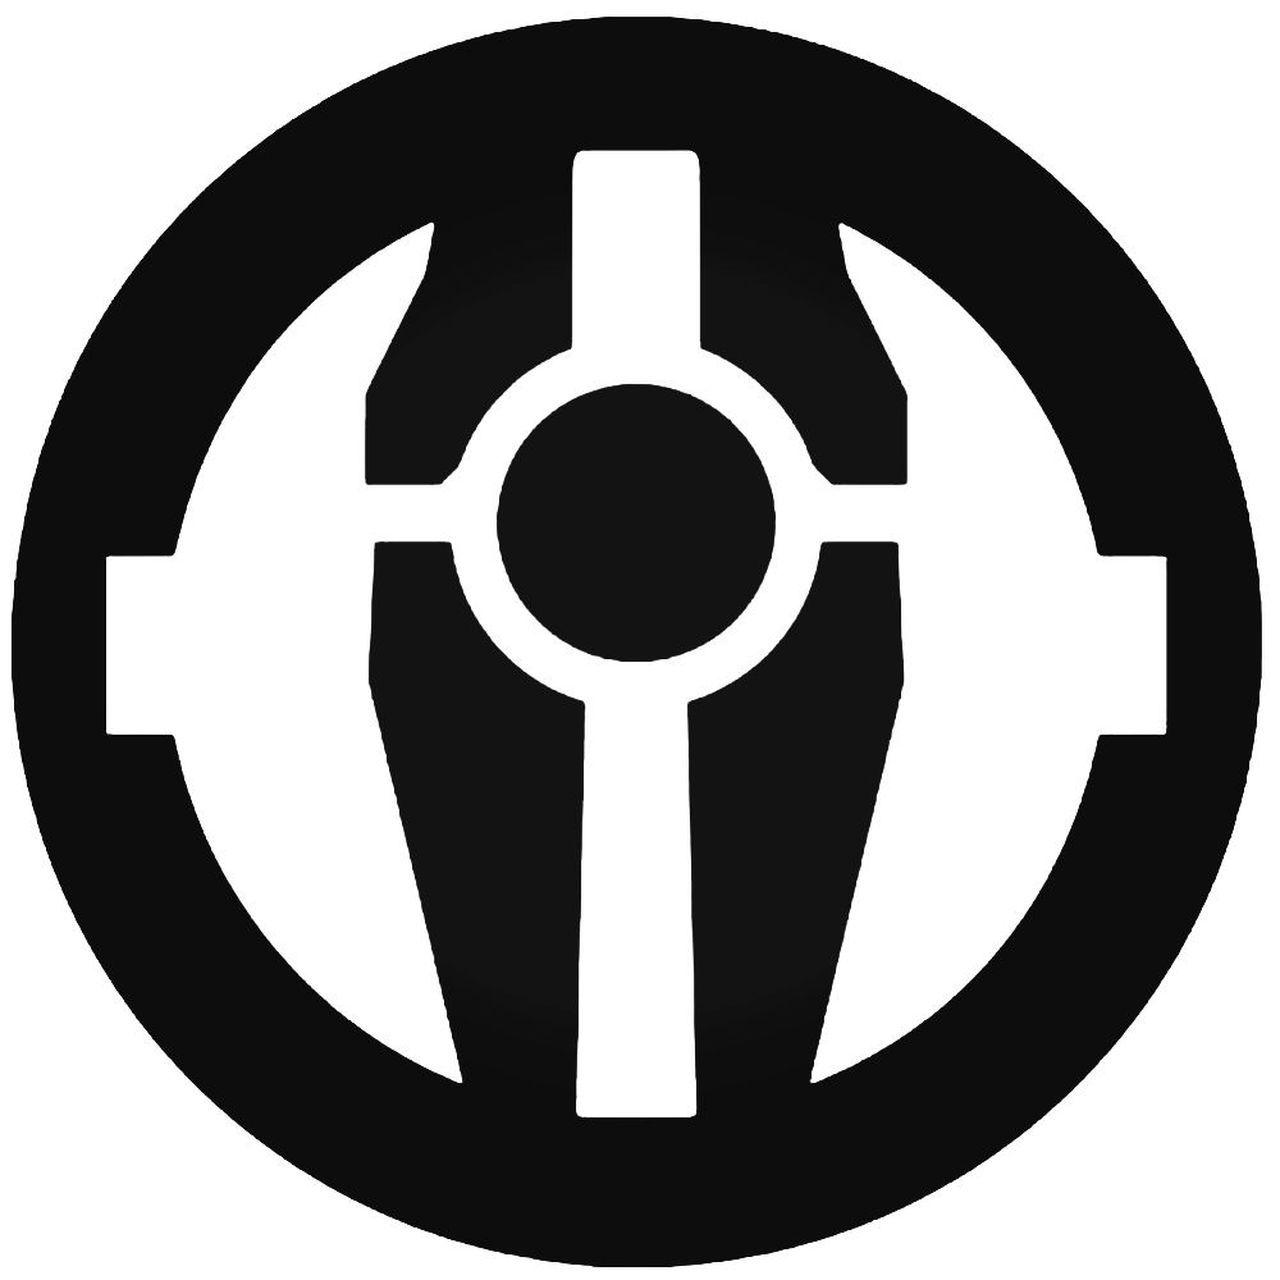 Sith Logo - Sith Empire Emblem Decal Sticker